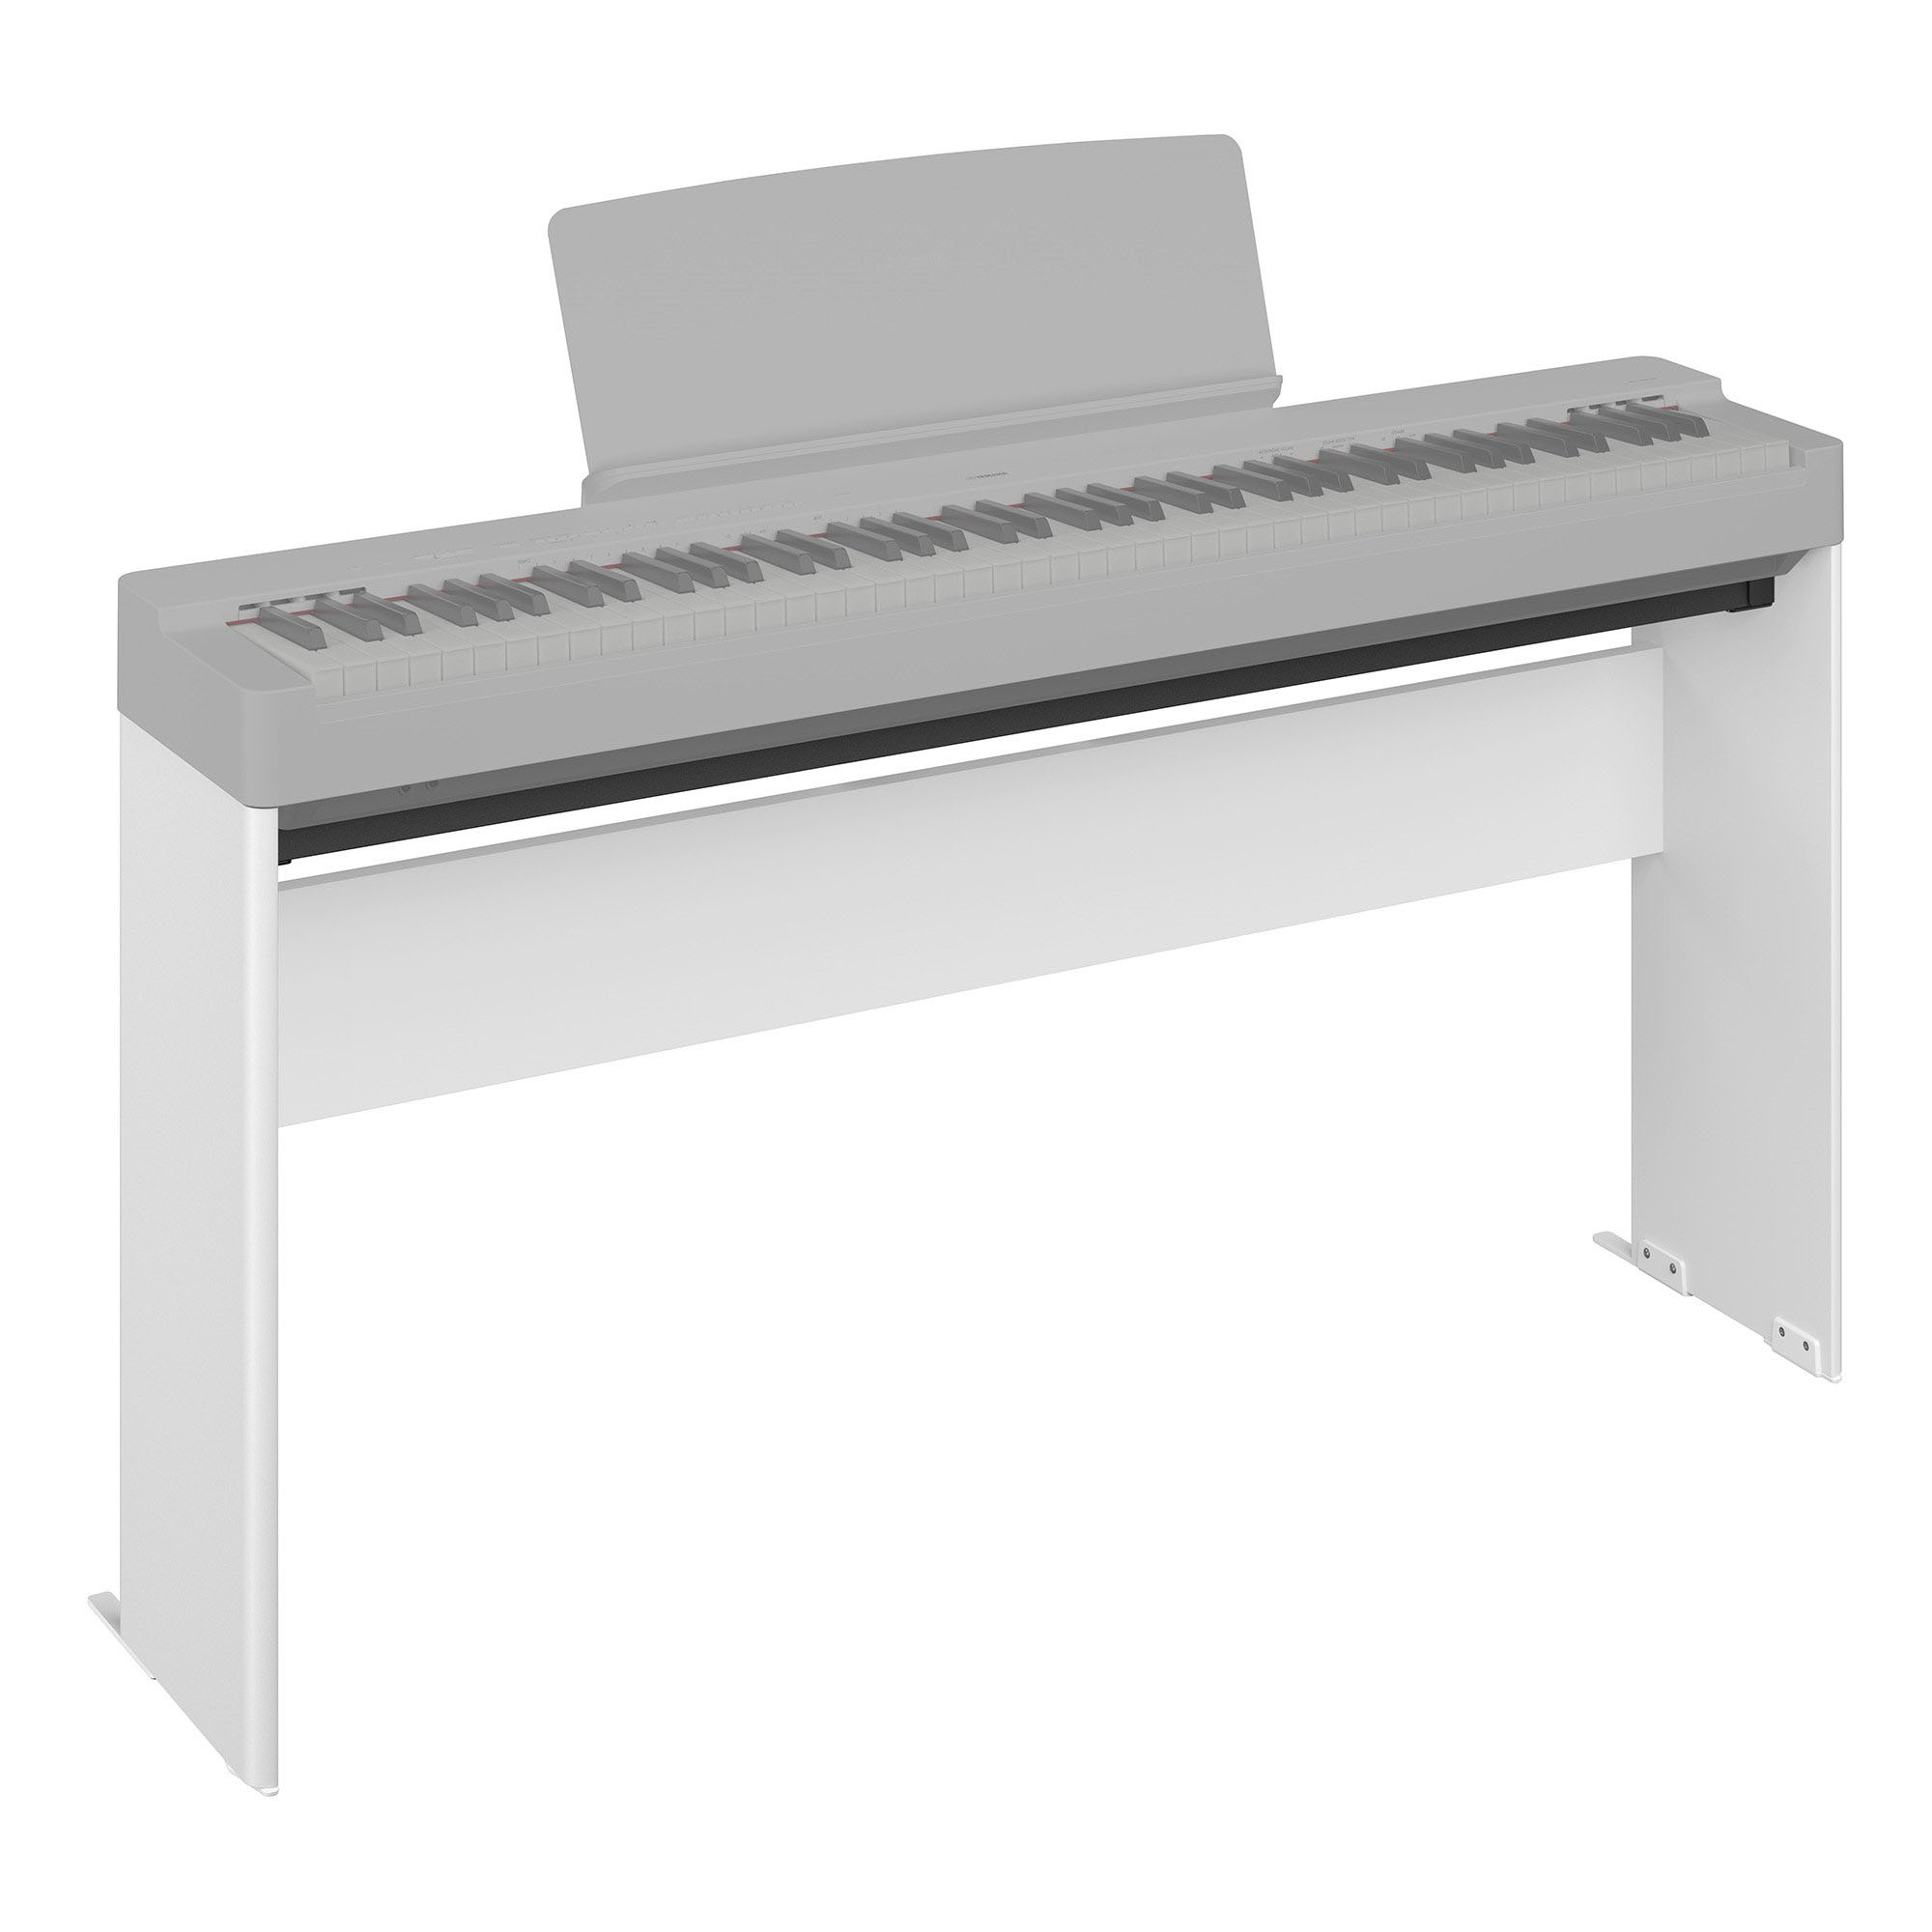 https://media.auvisa.com/214193/yamaha-l200wh-soporte-piano-digital-blanco-p225.jpg